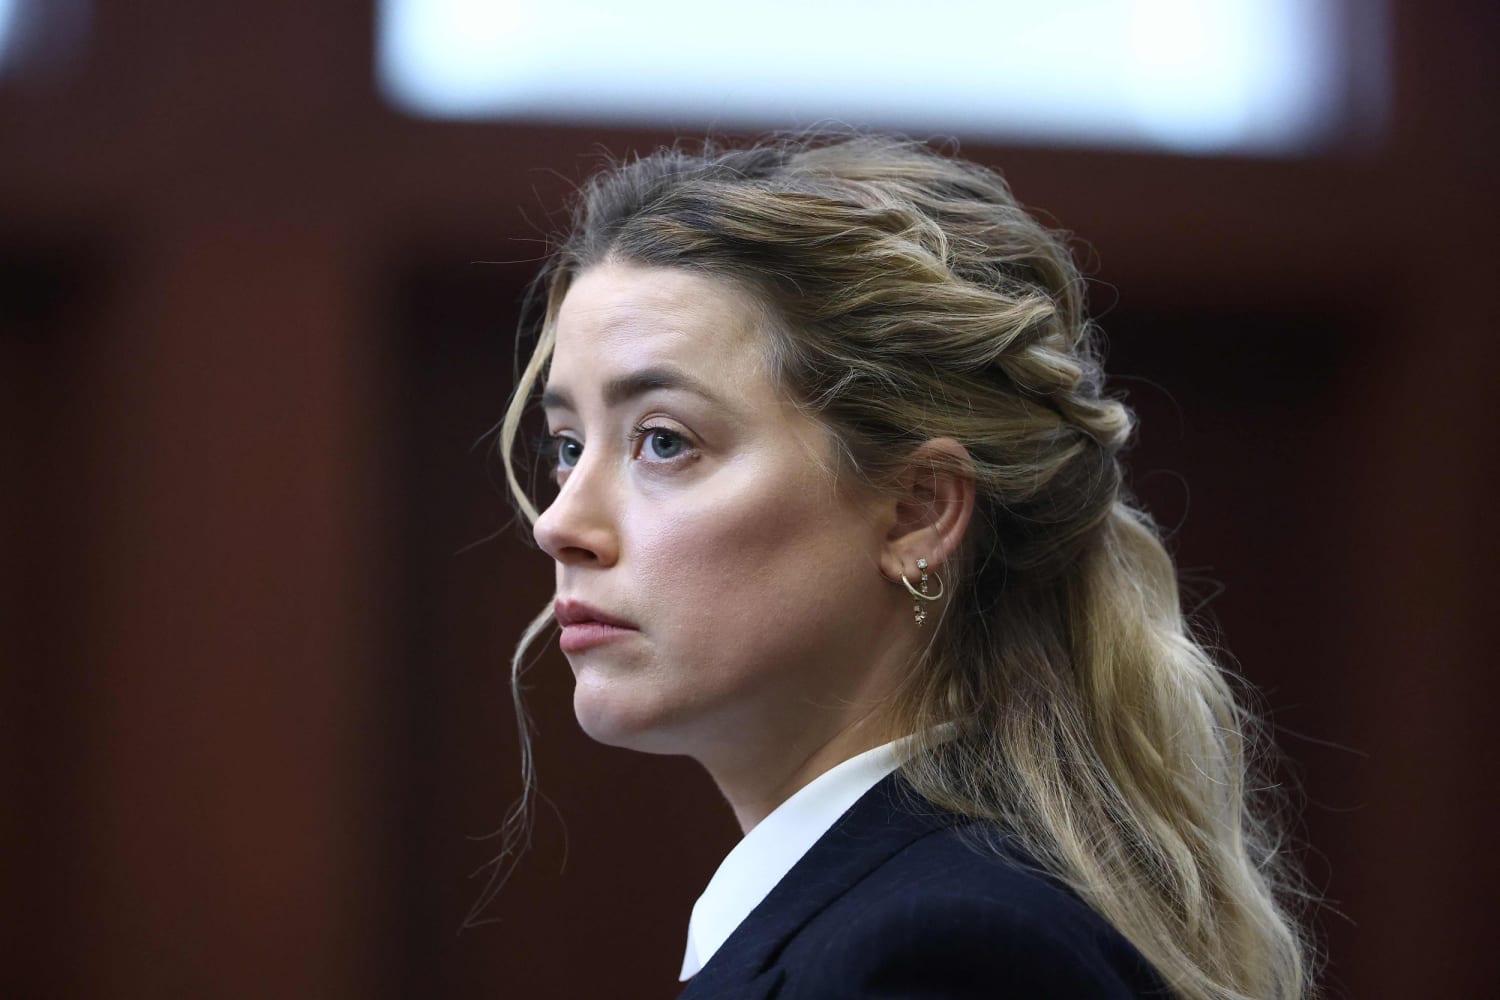 TikTok Trend: Videos Ridiculing Amber Heard Testimony in Depp Case